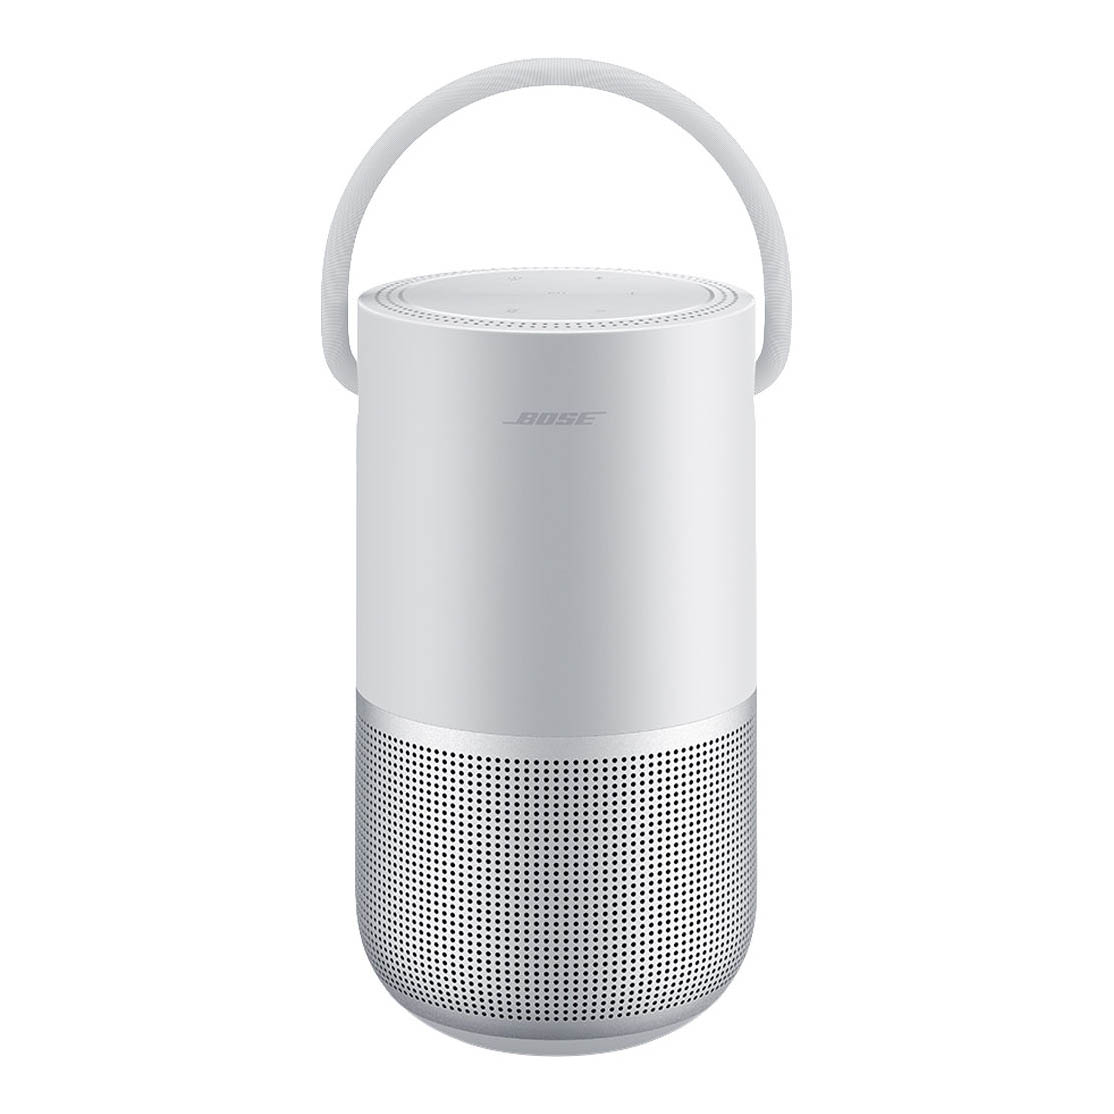 Умная колонка Bose Portable Home Speaker, серебристый bluetooth speaker shockproof travel soft column durable silicone protective case cover for bose portable home speaker